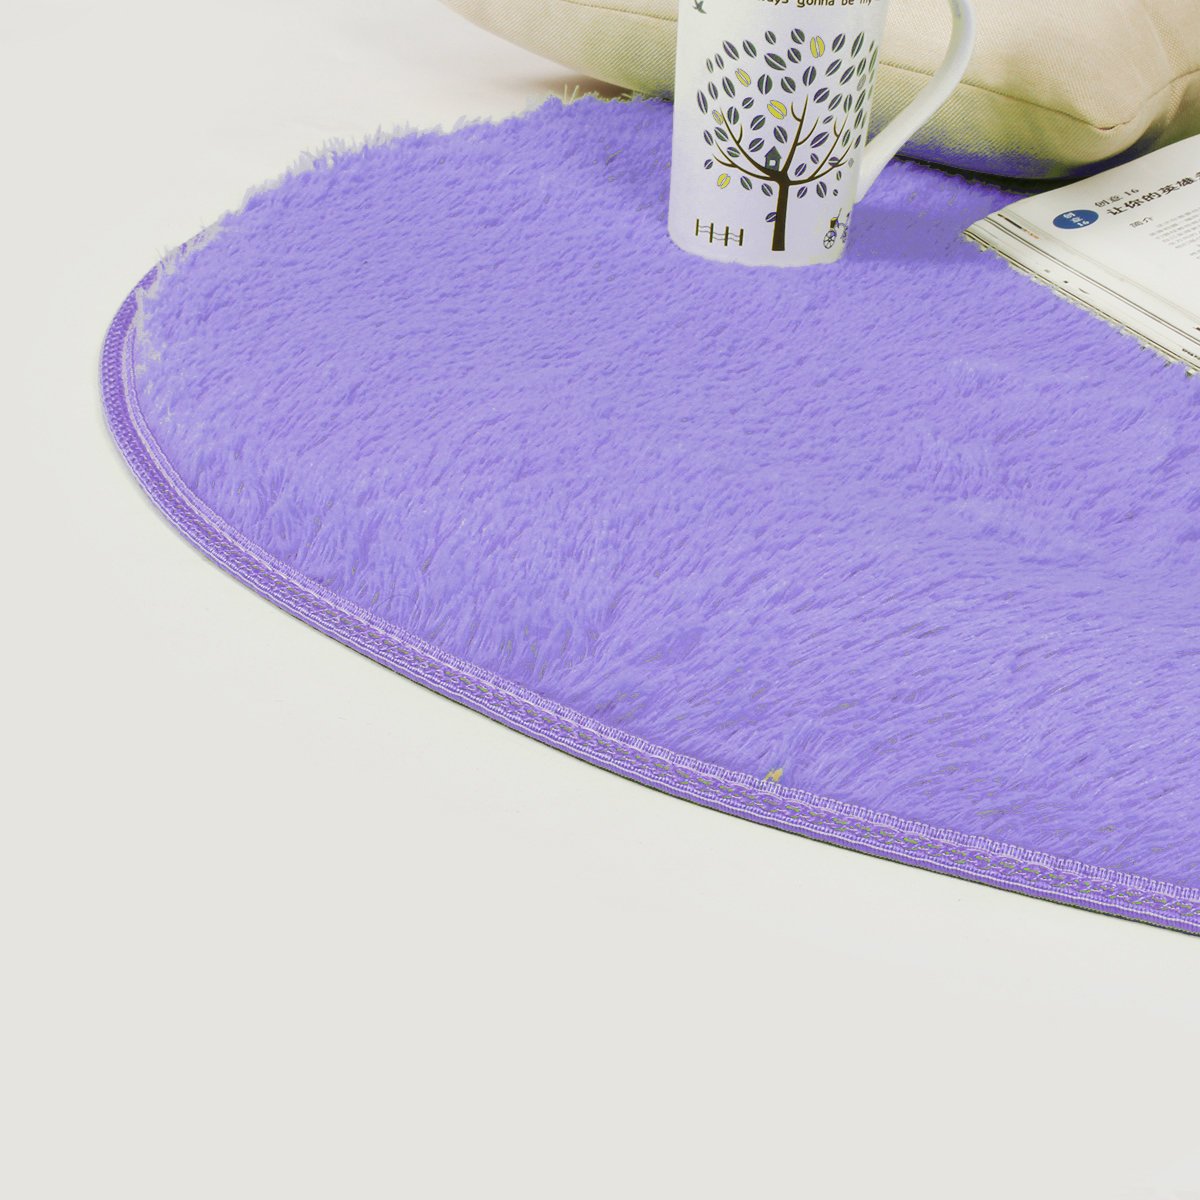 100cm Round Circles Floor Carpets Sponge Non Slip Machine Washable Rugs 6 Colors Choices